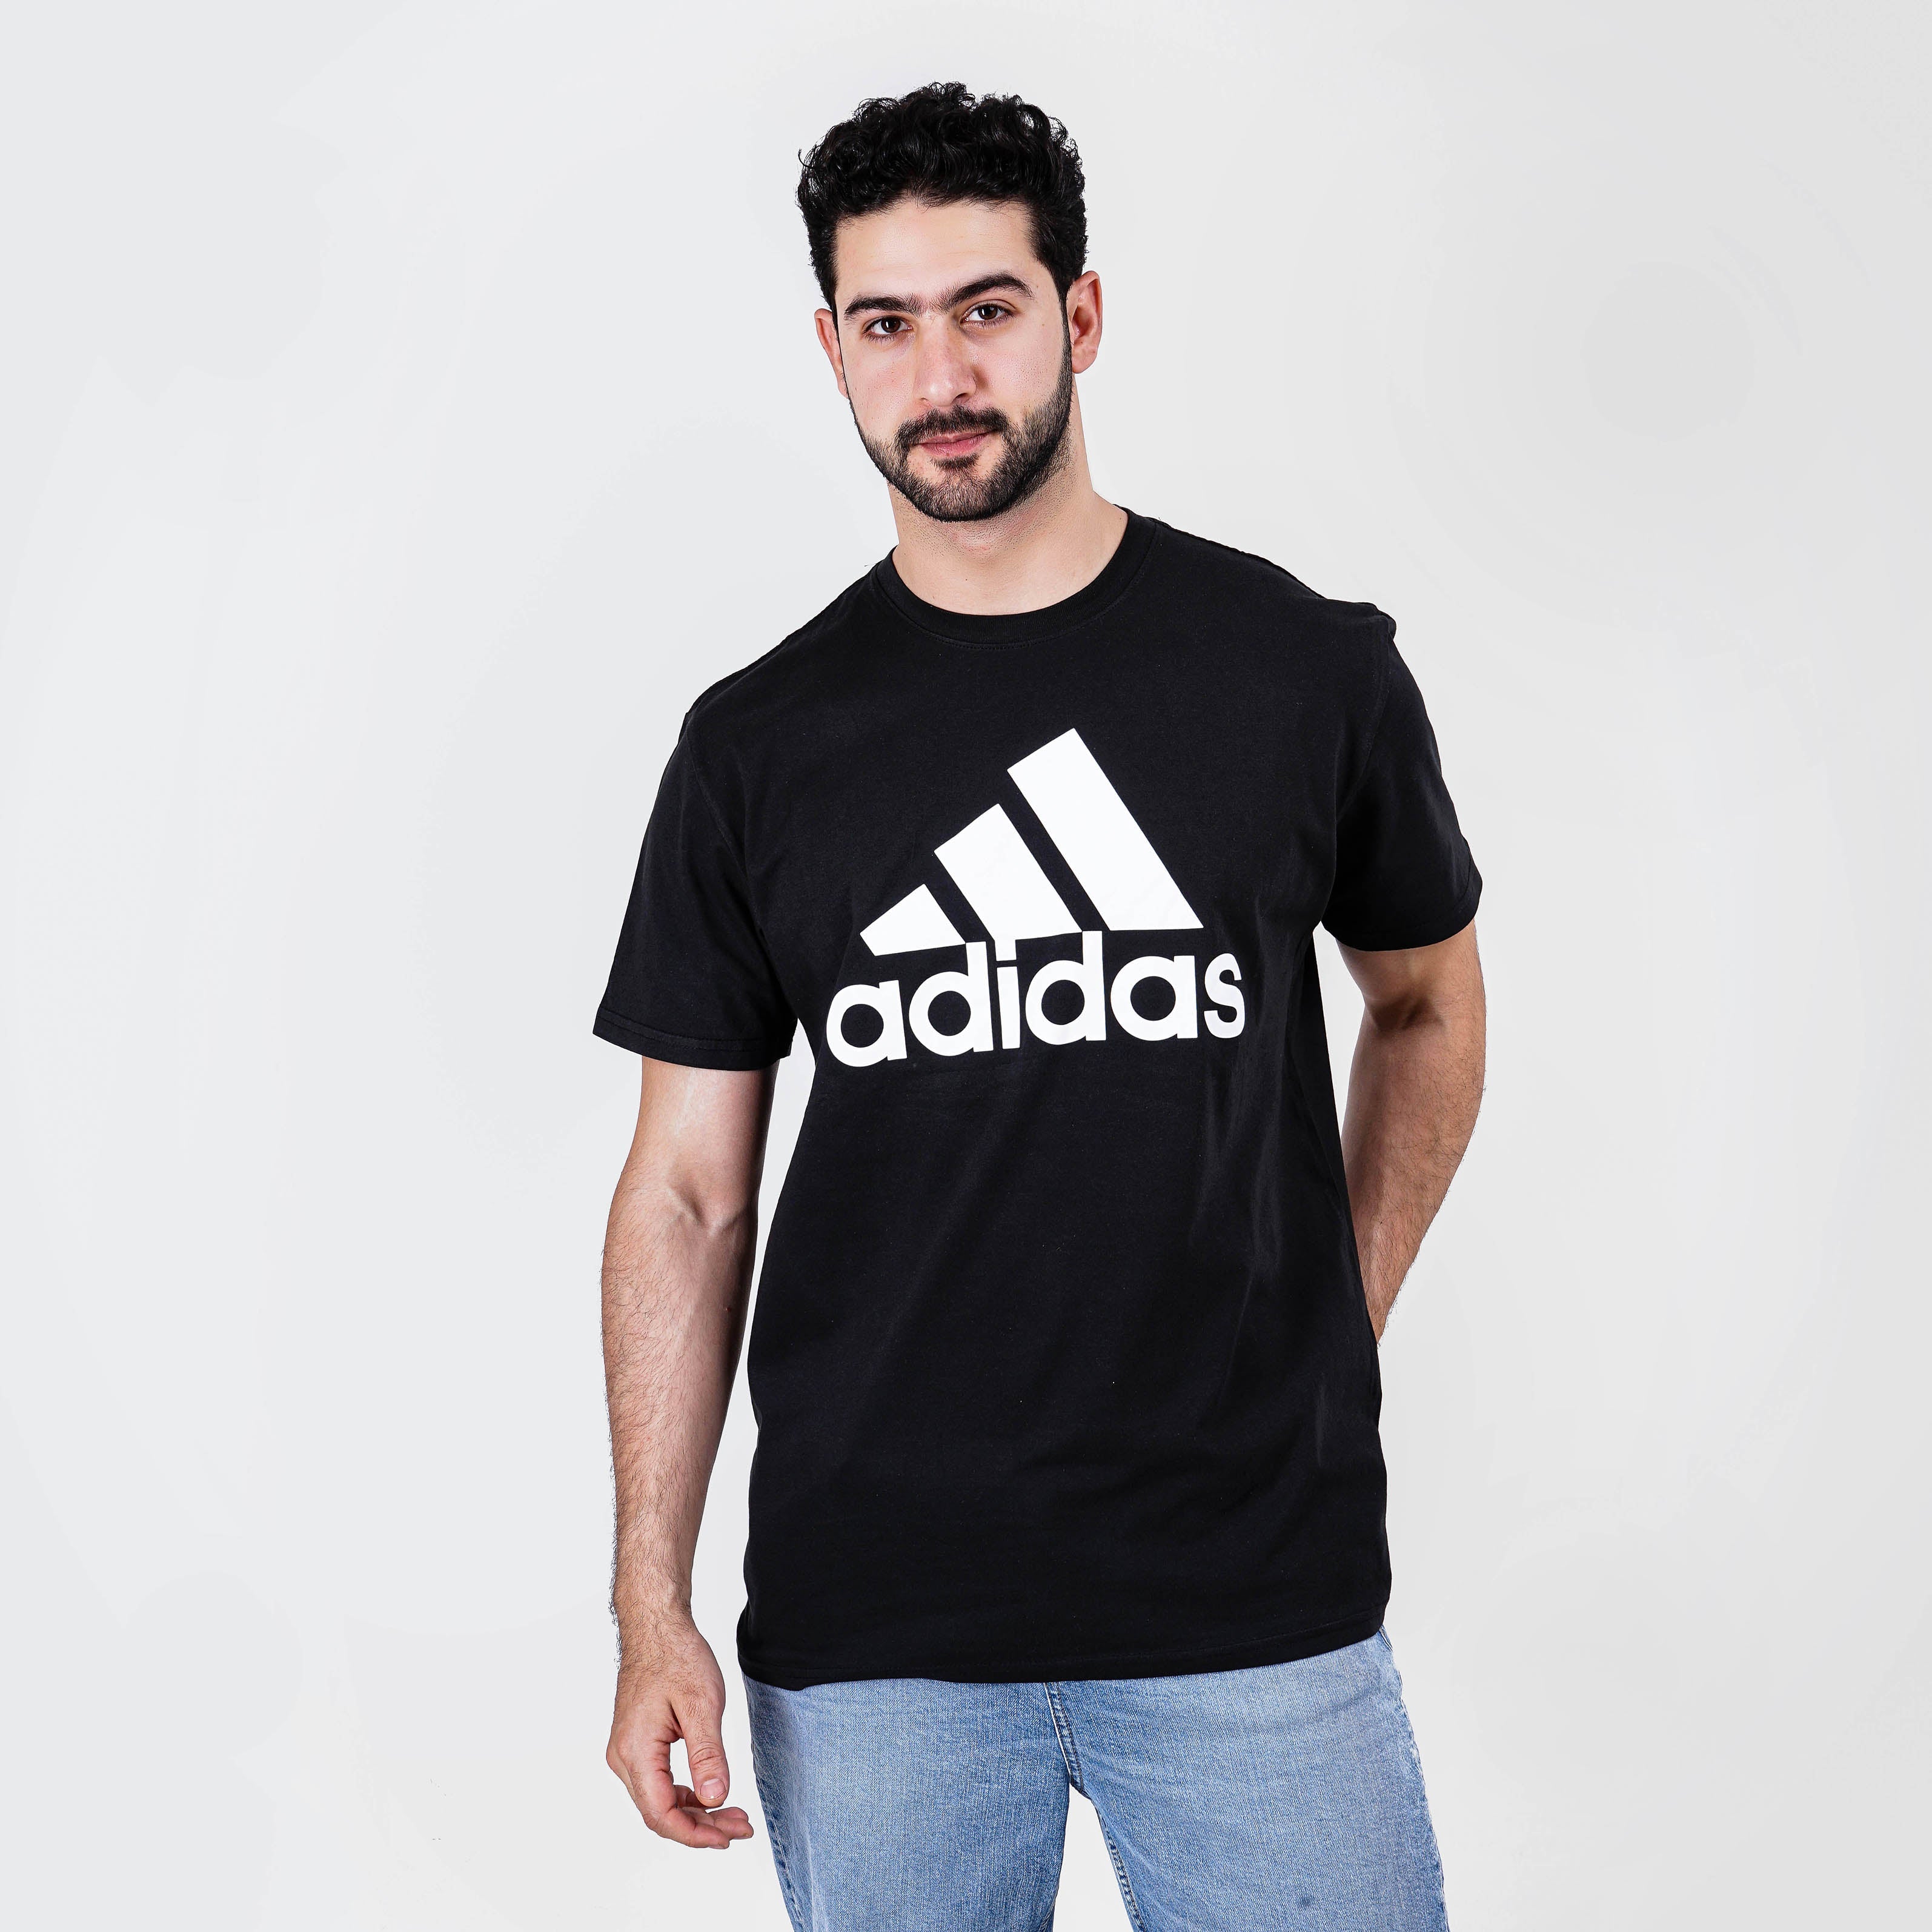 Original Adidas Black Tee with white logo - Marca Deals - Adidas